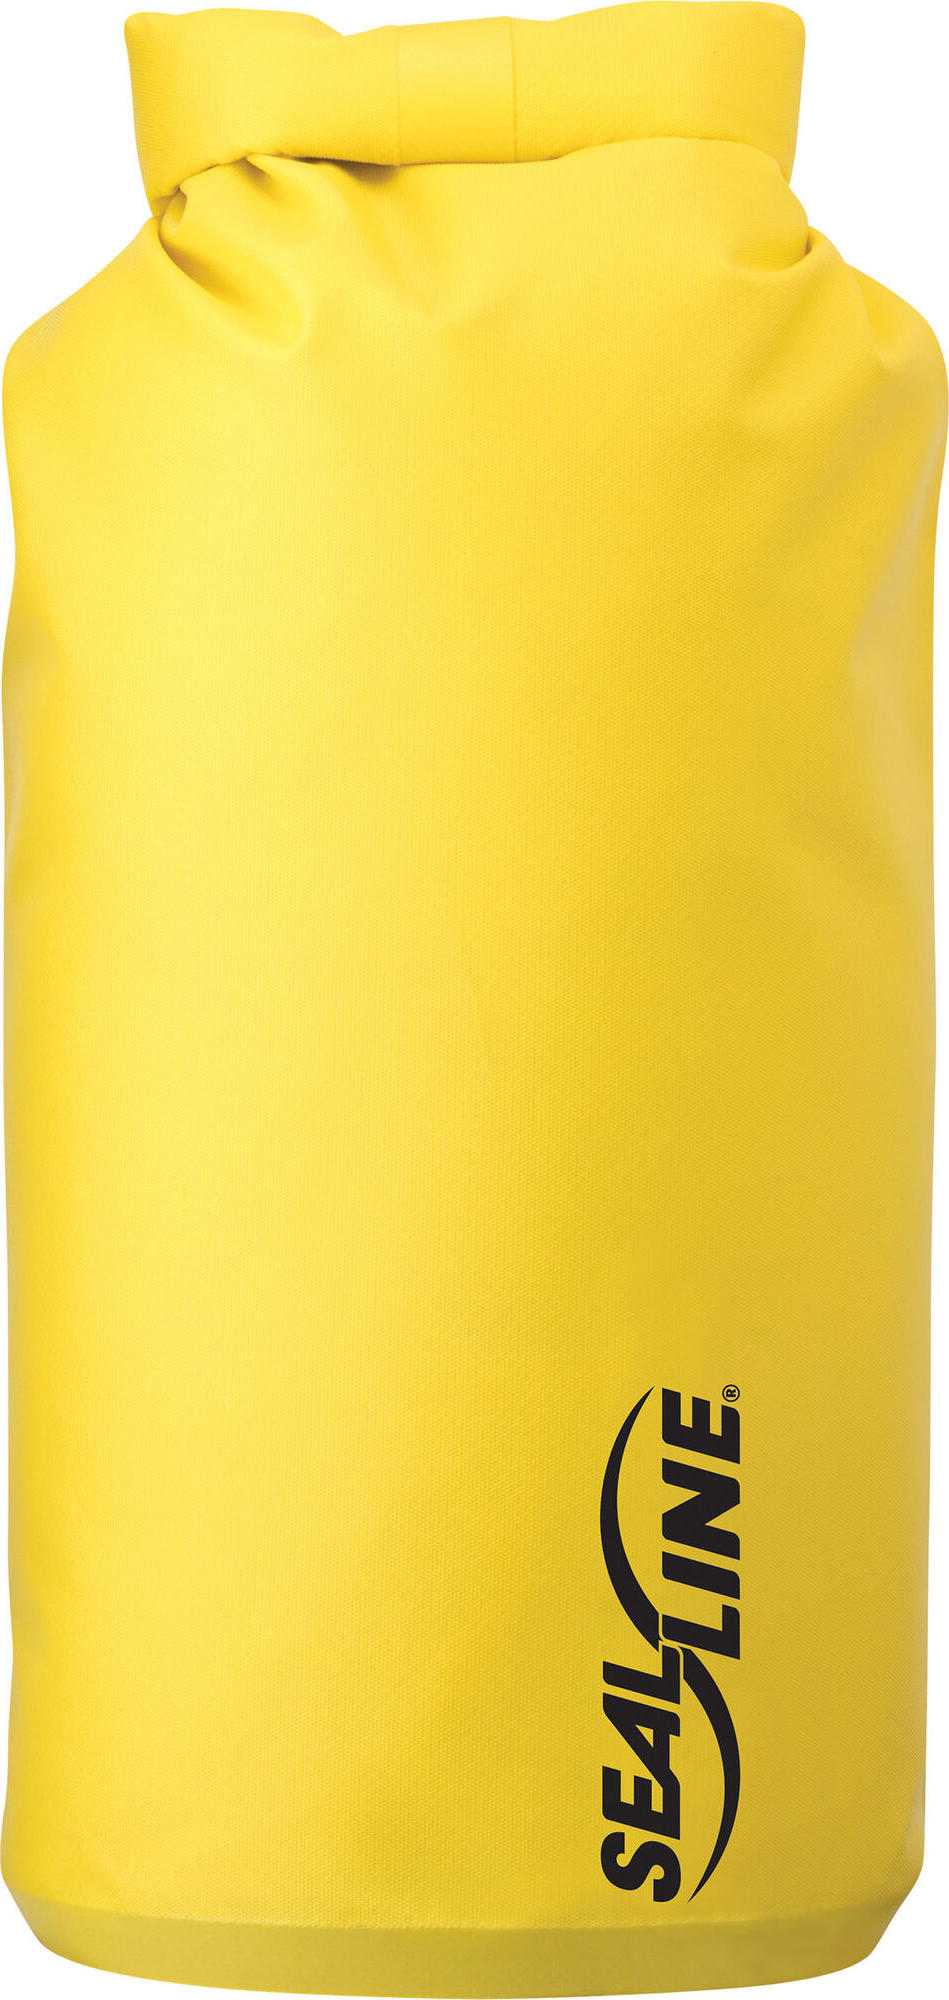 Sealline Baja Dry Bag yellow 30L